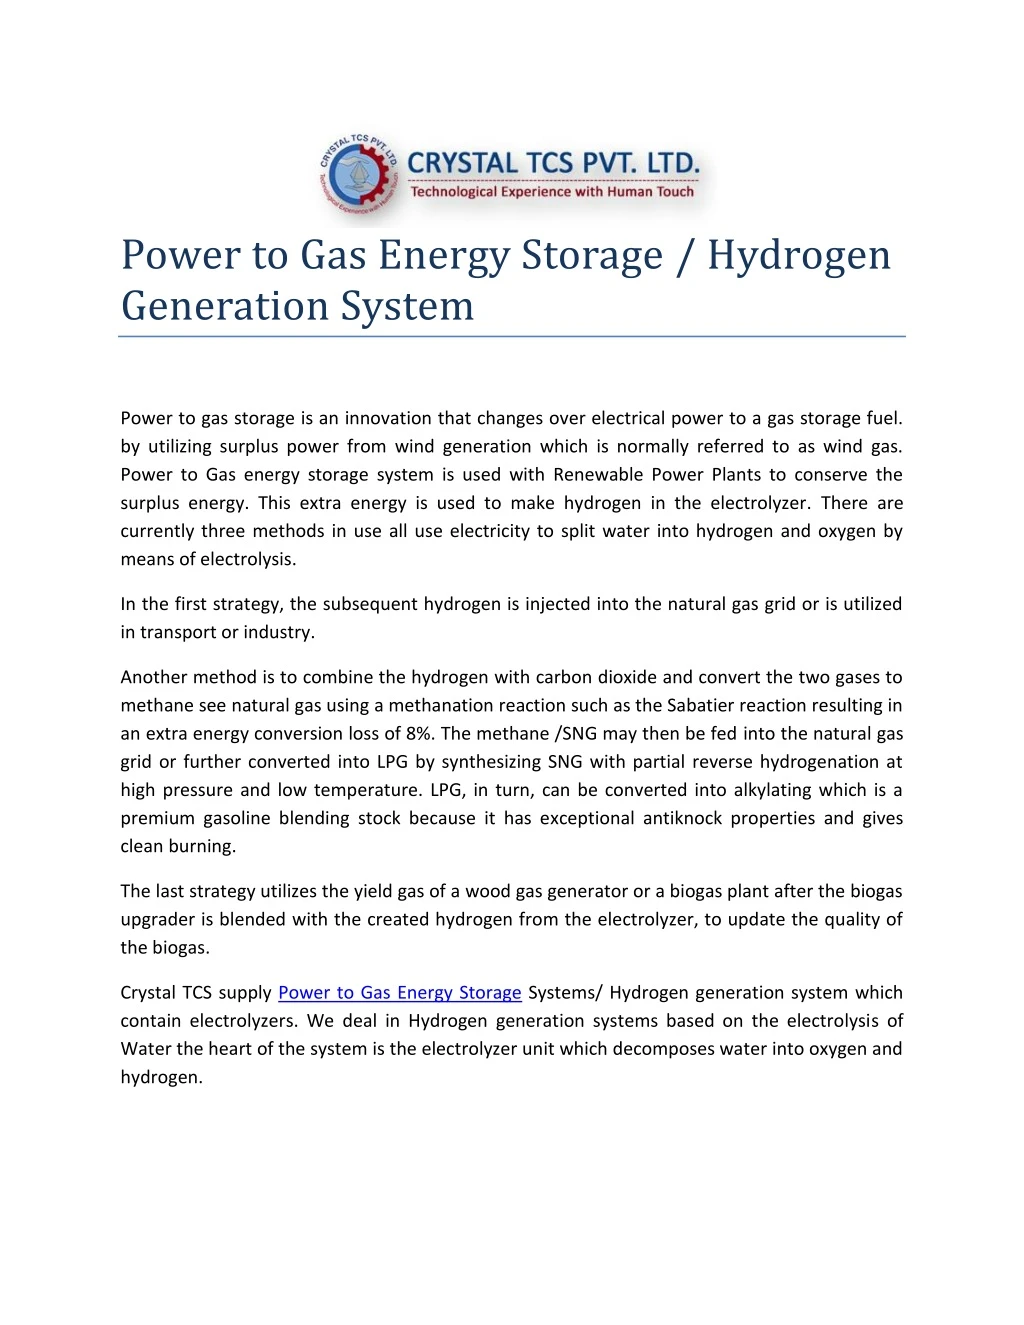 power to gas energy storage hydrogen generation